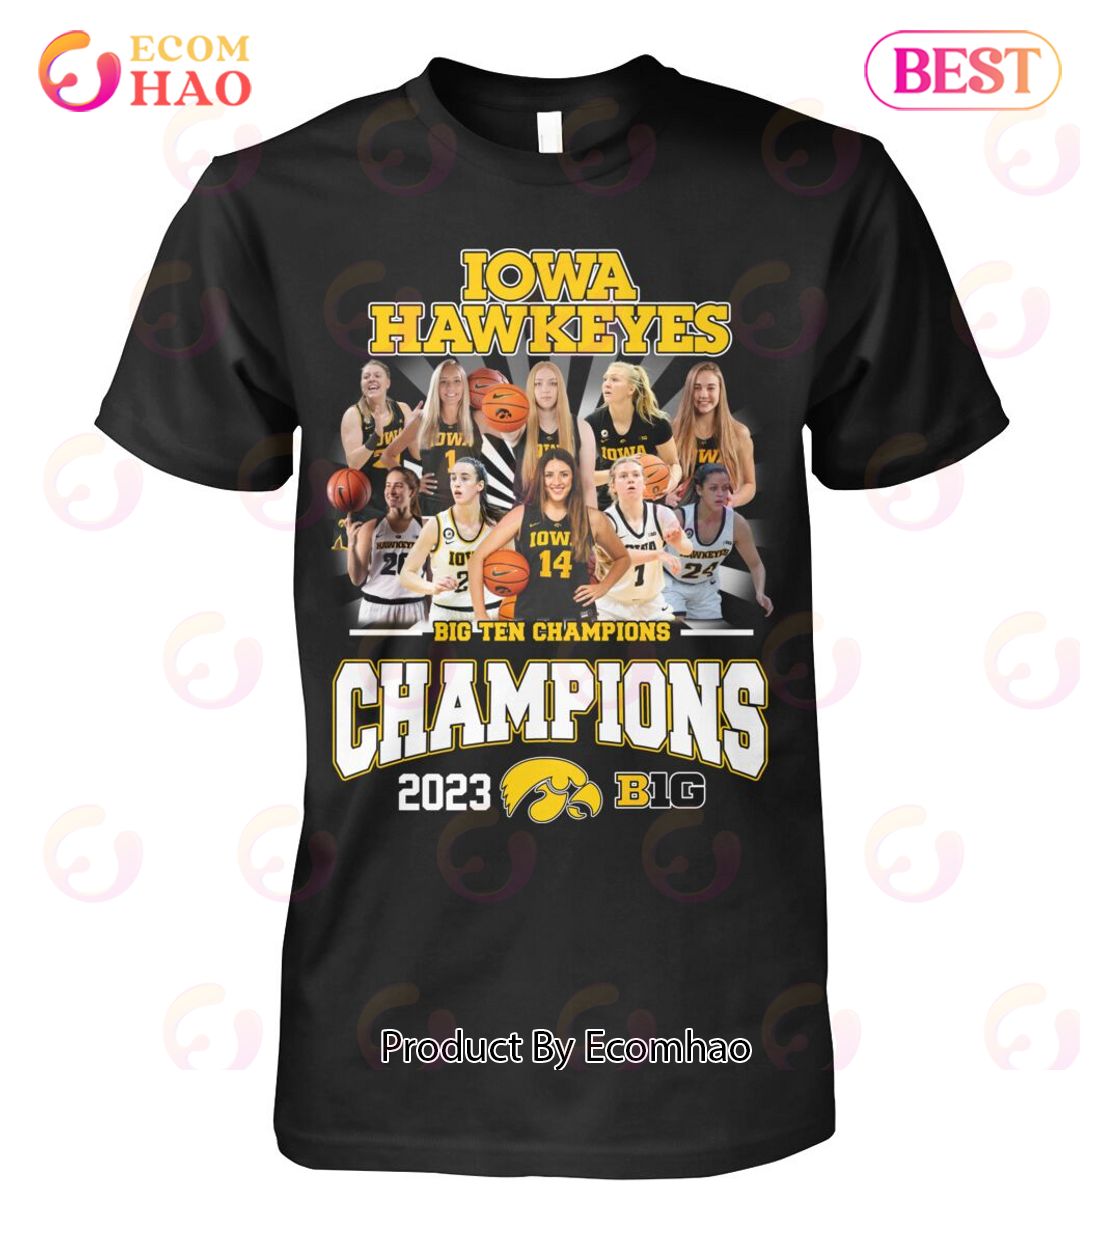 Iowa Hawkeyes Bigten Champions 2023 T-Shirt - Ecomhao Store